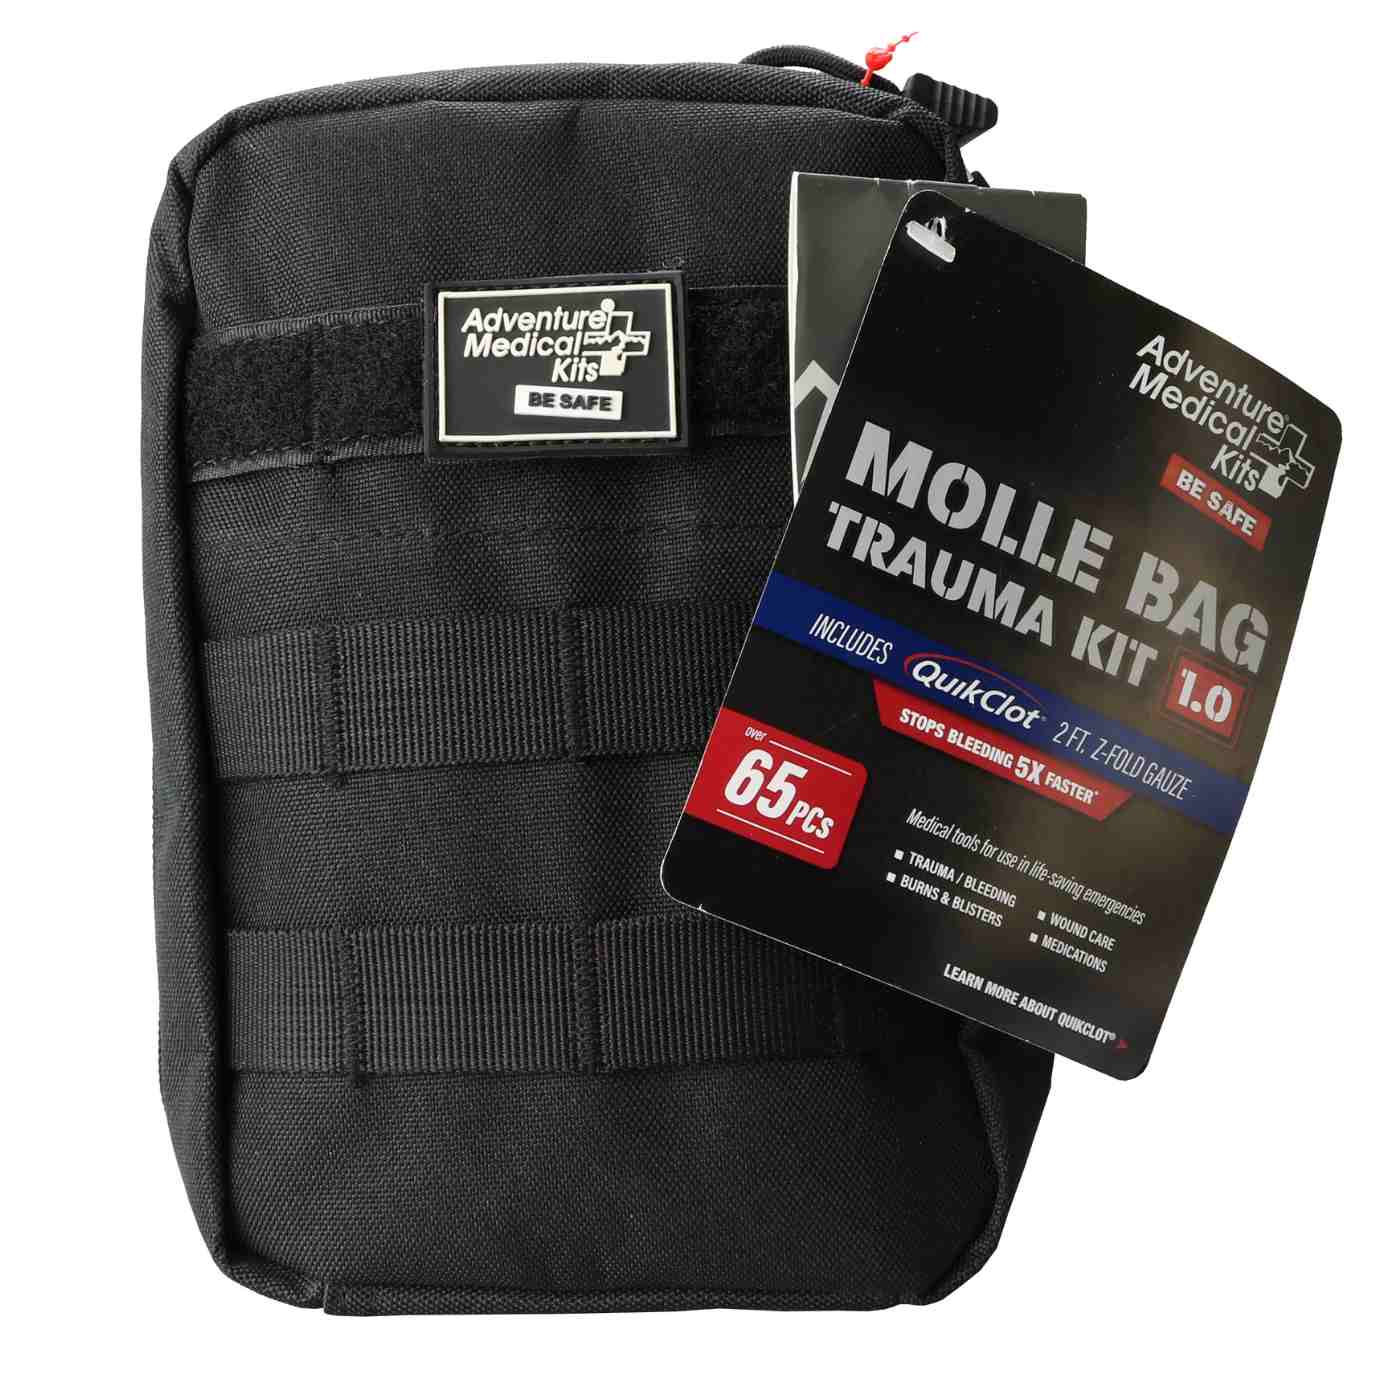 MOLLE Bag Trauma Kit 1.0 - Black front